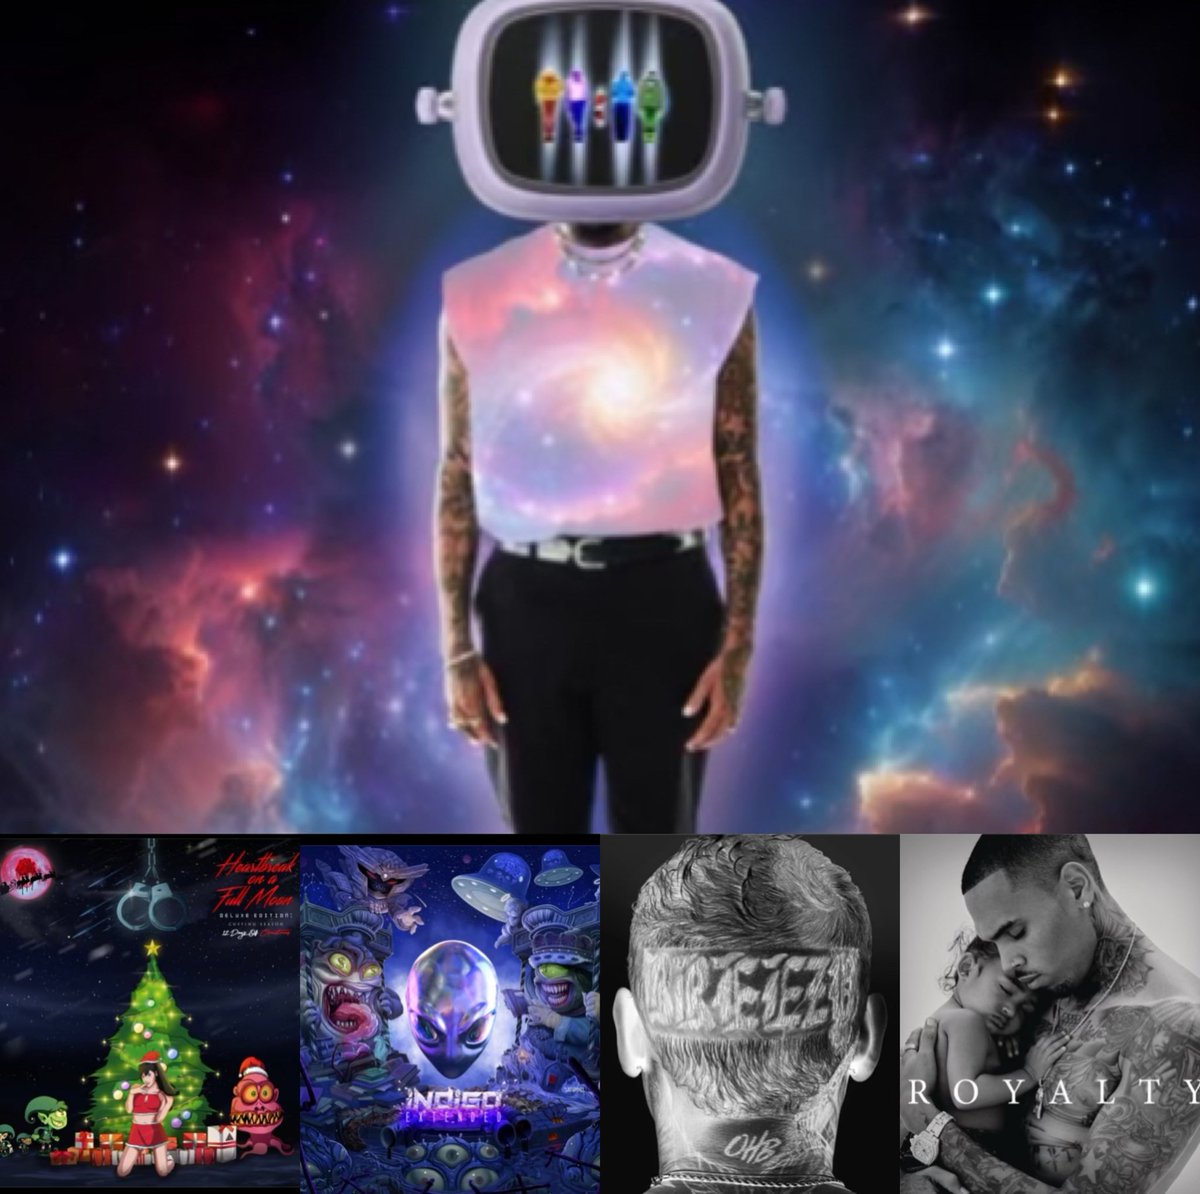 📈 #ChrisBrown’s last five albums current total Spotify streams. (2015) Royalty - 818 Million (2017) Heartbreak on a full moon - 2.1 Billion (2019) Indigo - 3.4 Billion (2022) Breezy - 573 Million (2023) 11:11 - 490 Million